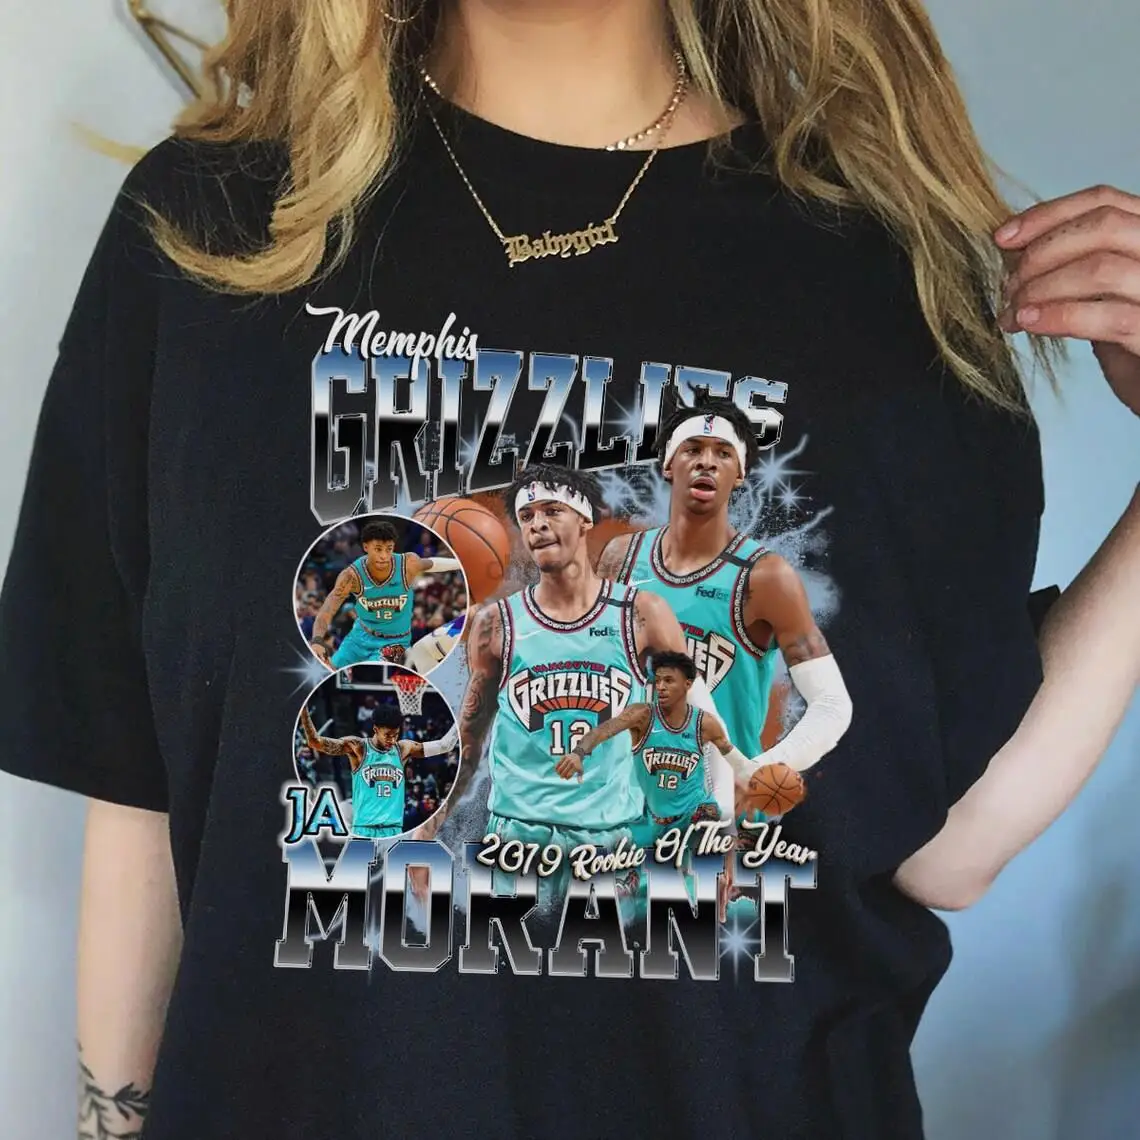 DownSpeak Vintage Wash Ja Morant T-Shirt, Ja Morant Shirt, Morant Shirt, 90s Retro Basketball Player Graphic Tee, Sports Lover Unisex T Shirt